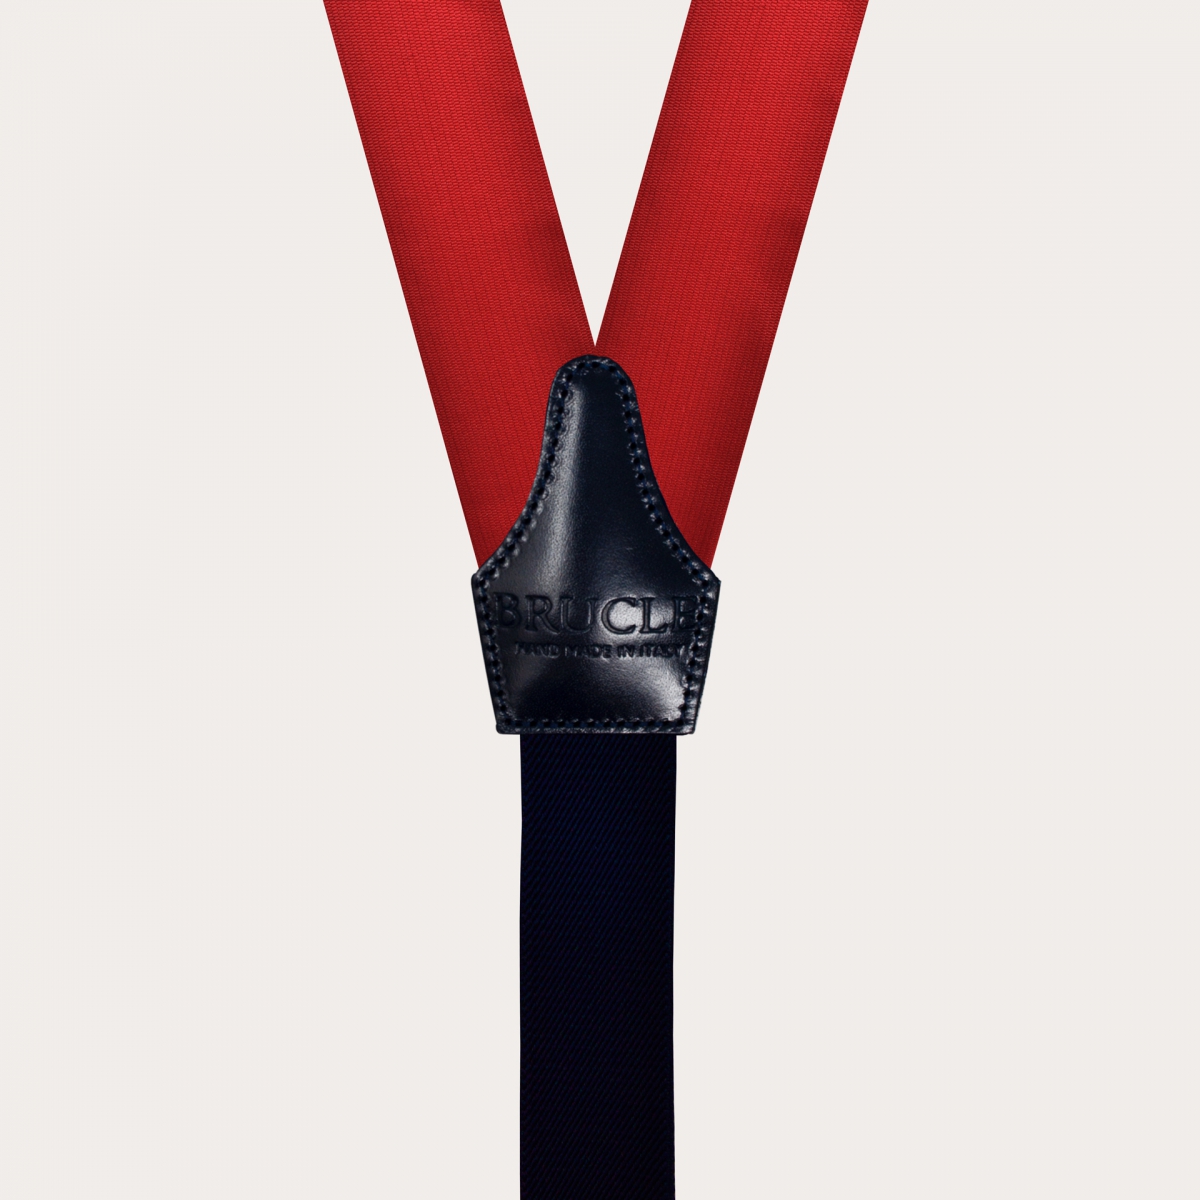 BRUCLE Formal Y-shape suspenders with braid runners, red